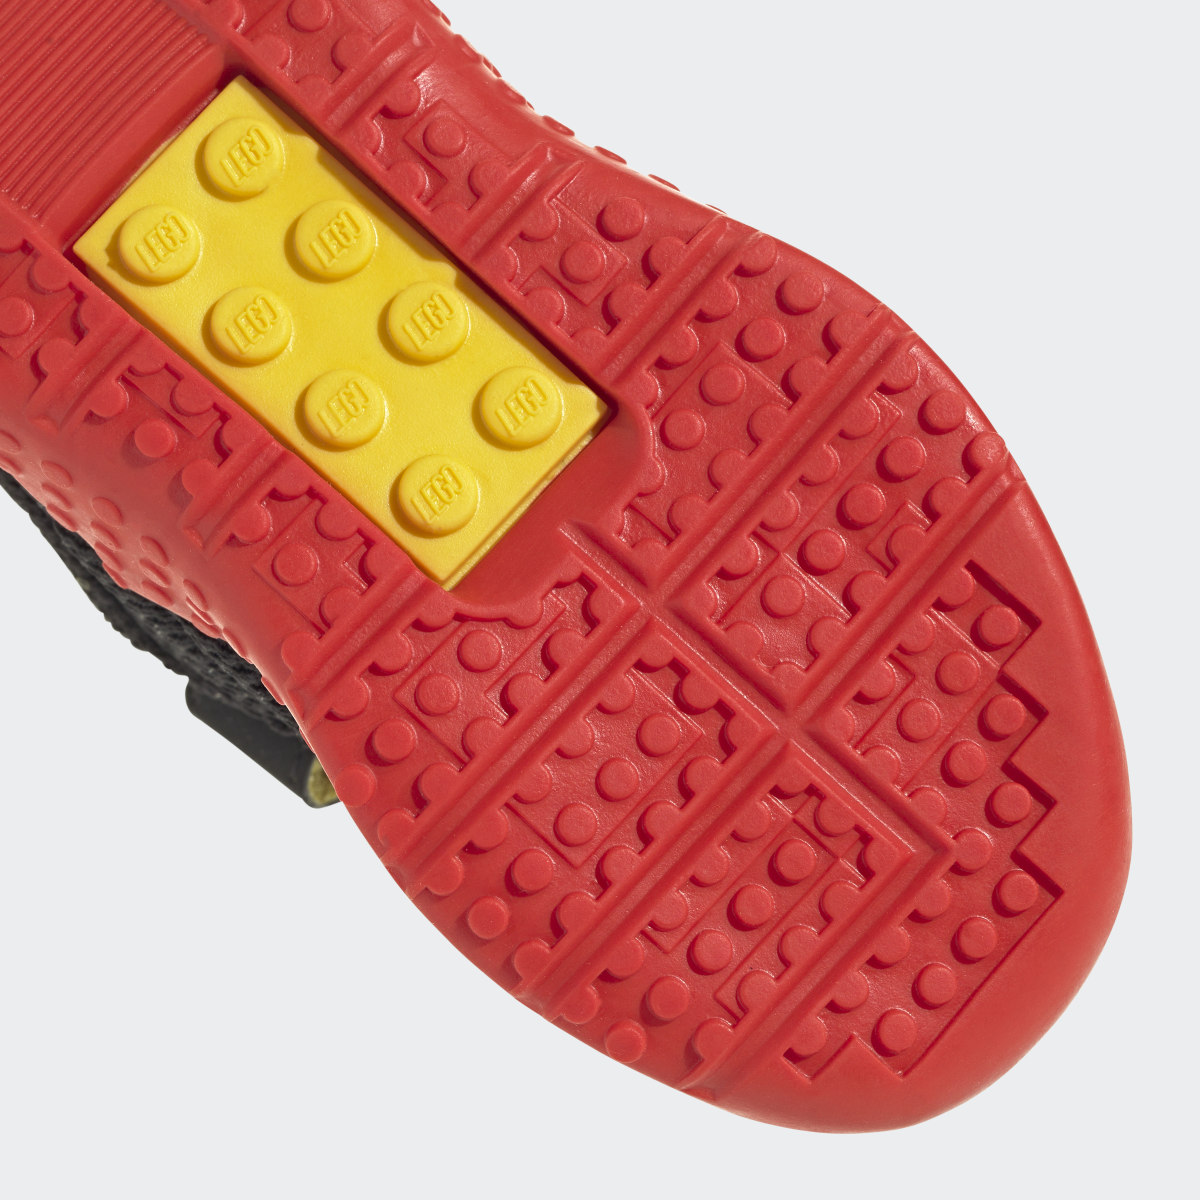 Adidas x LEGO® Sport Pro Shoes. 9